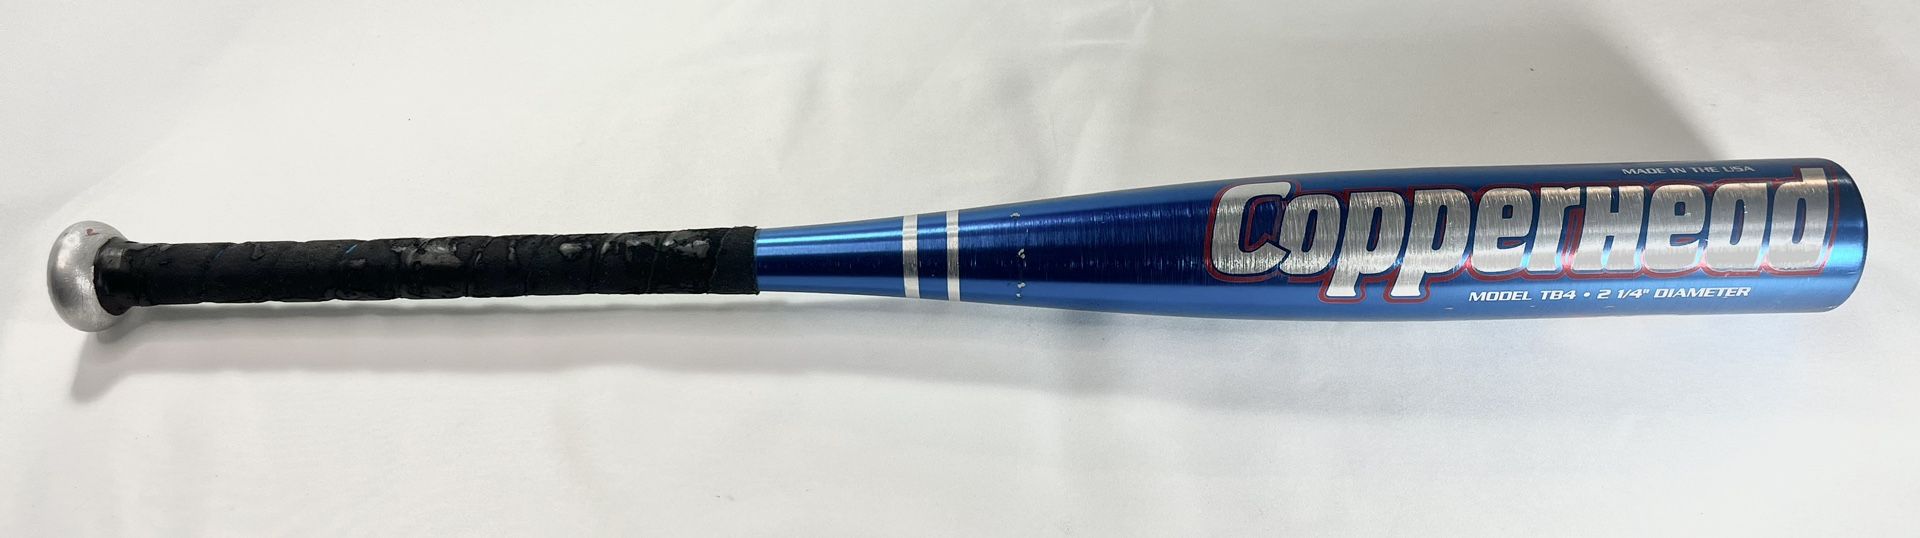 Worth Copperhead Blue Teeball Bat Model TB4 26 inch 16 oz 2 1/4" Diameter Bat